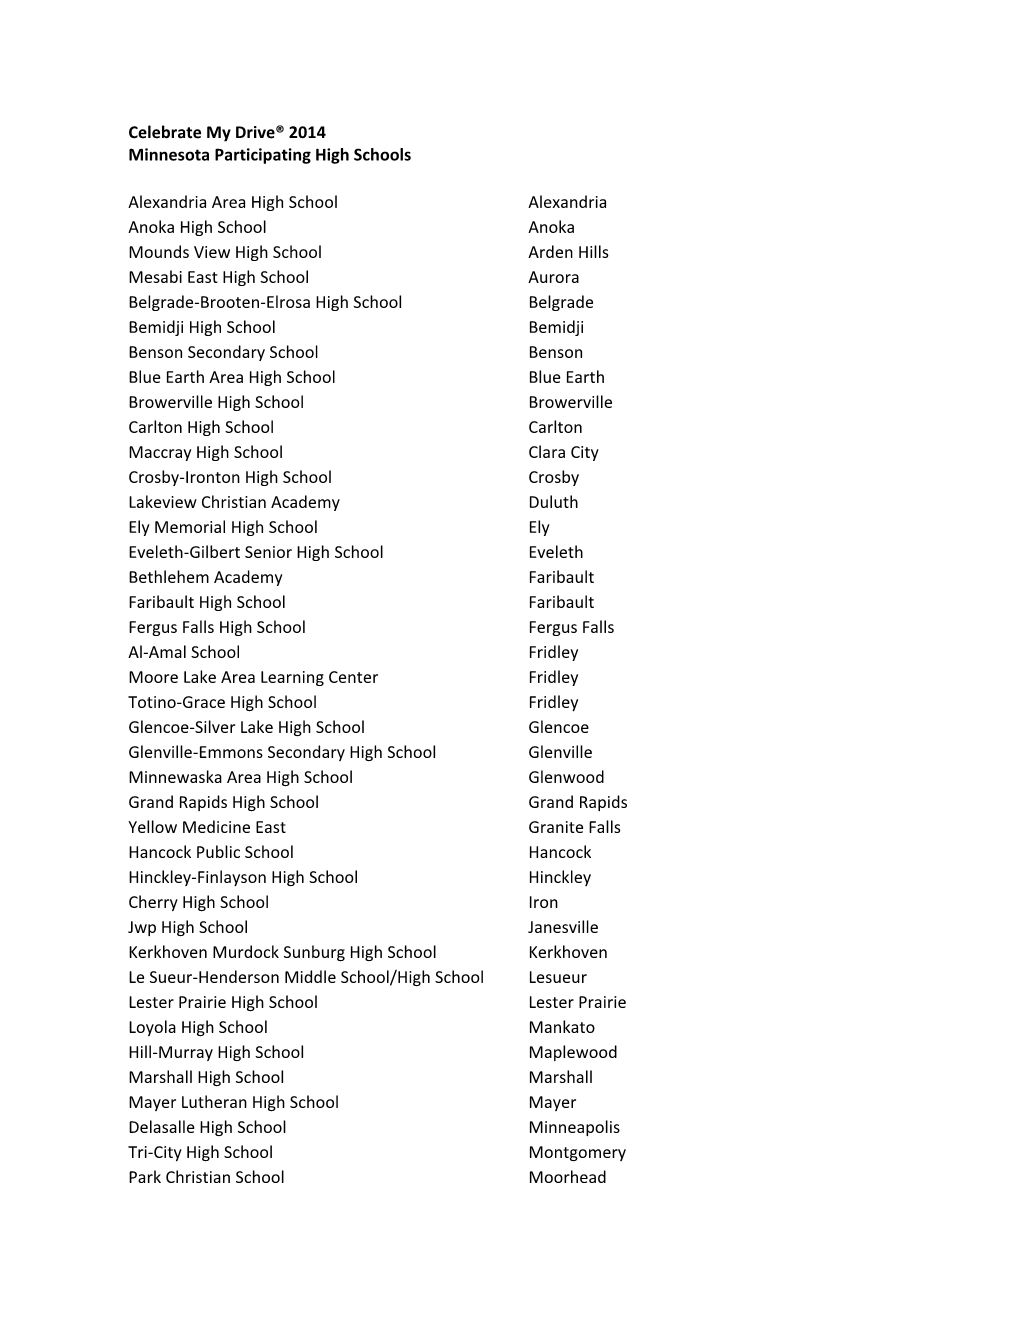 List of Participating Minnesota High Schools